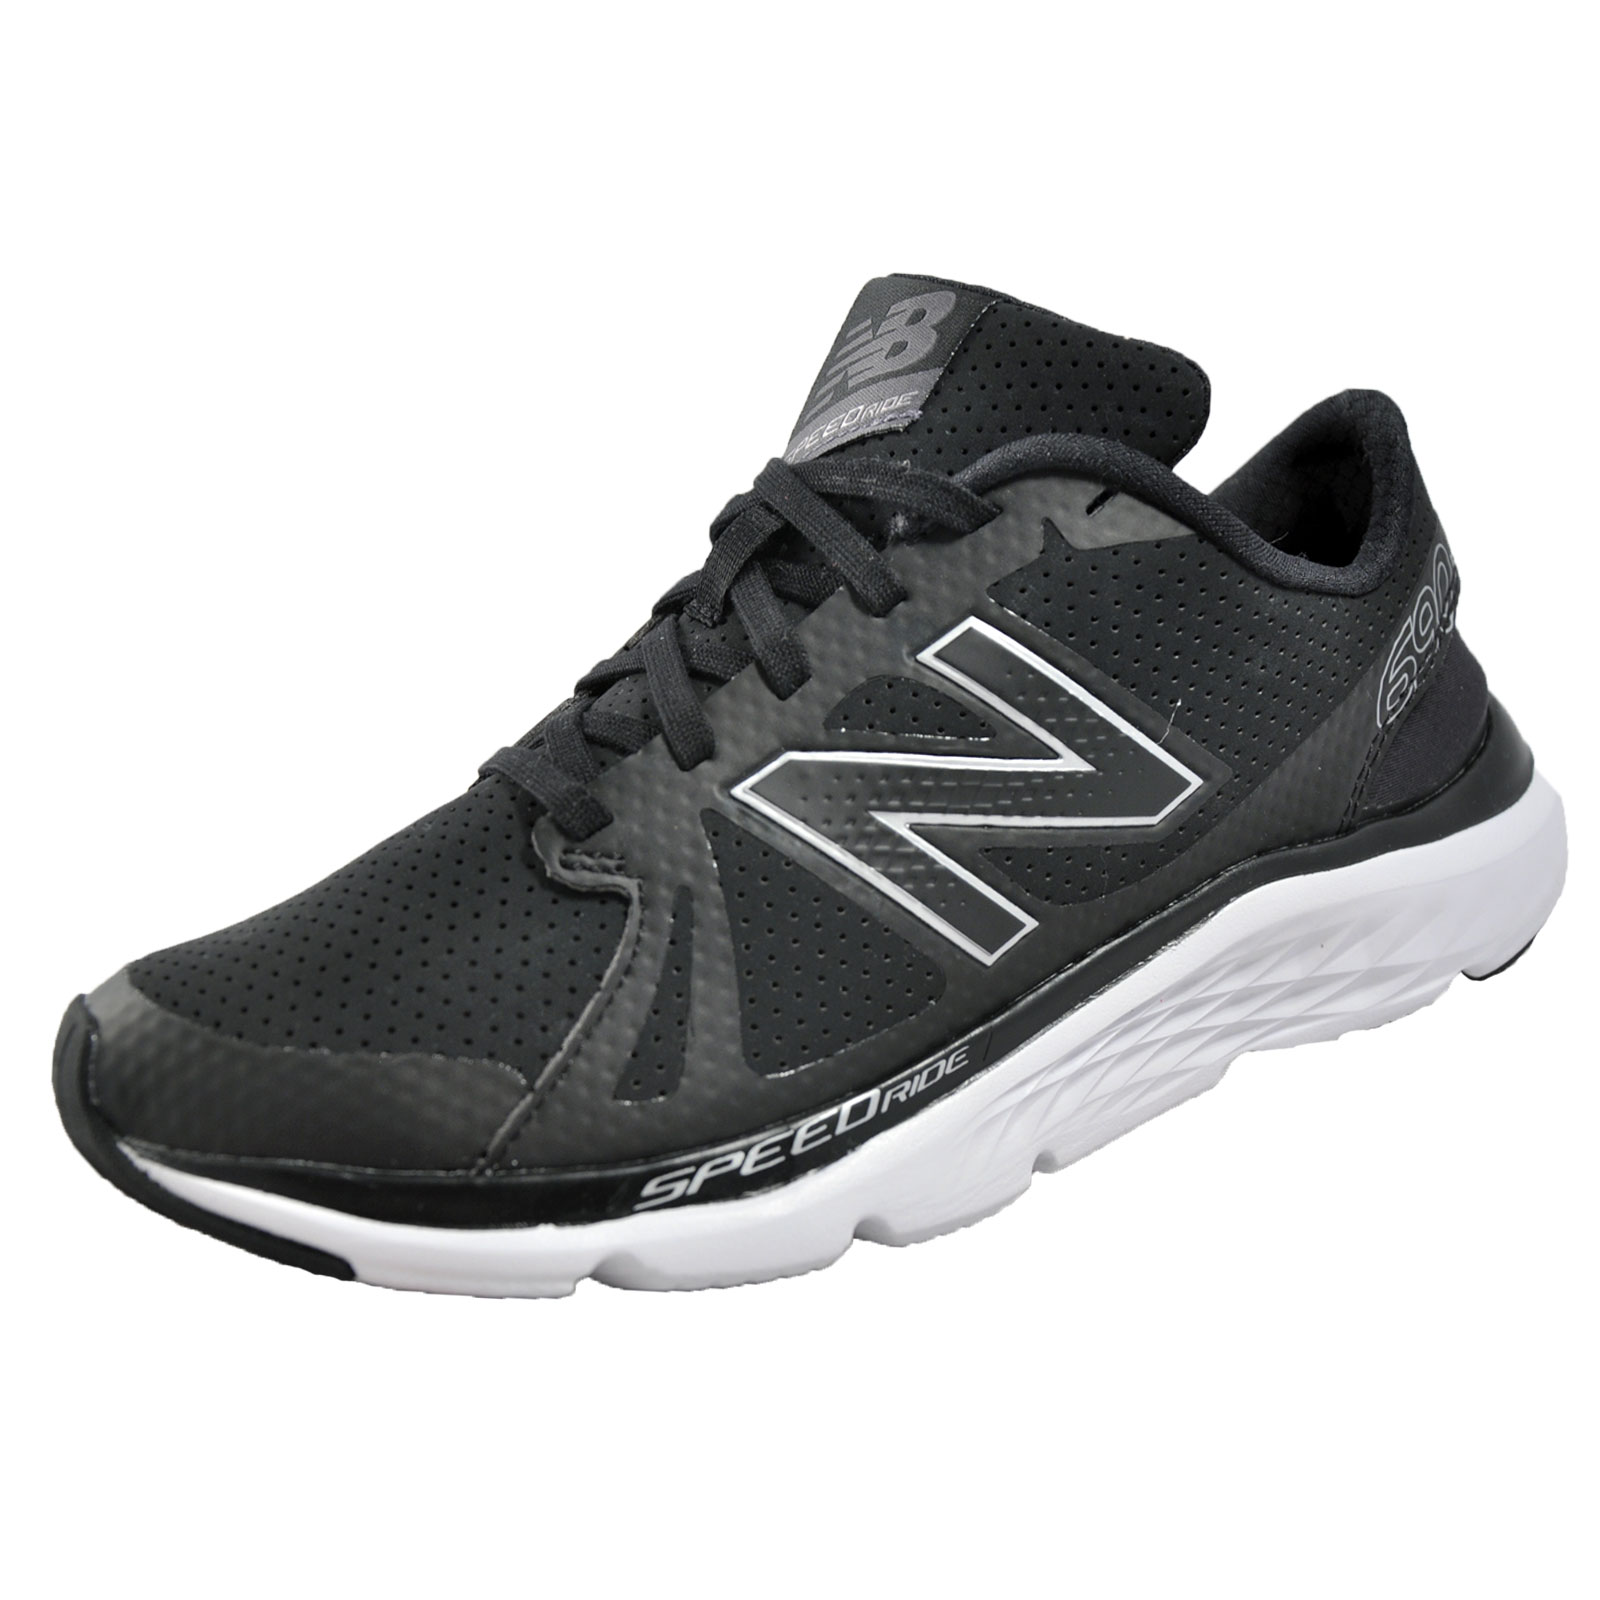 New Balance 690 v4 Womens Running Shoes Gym Trainers Black | eBay